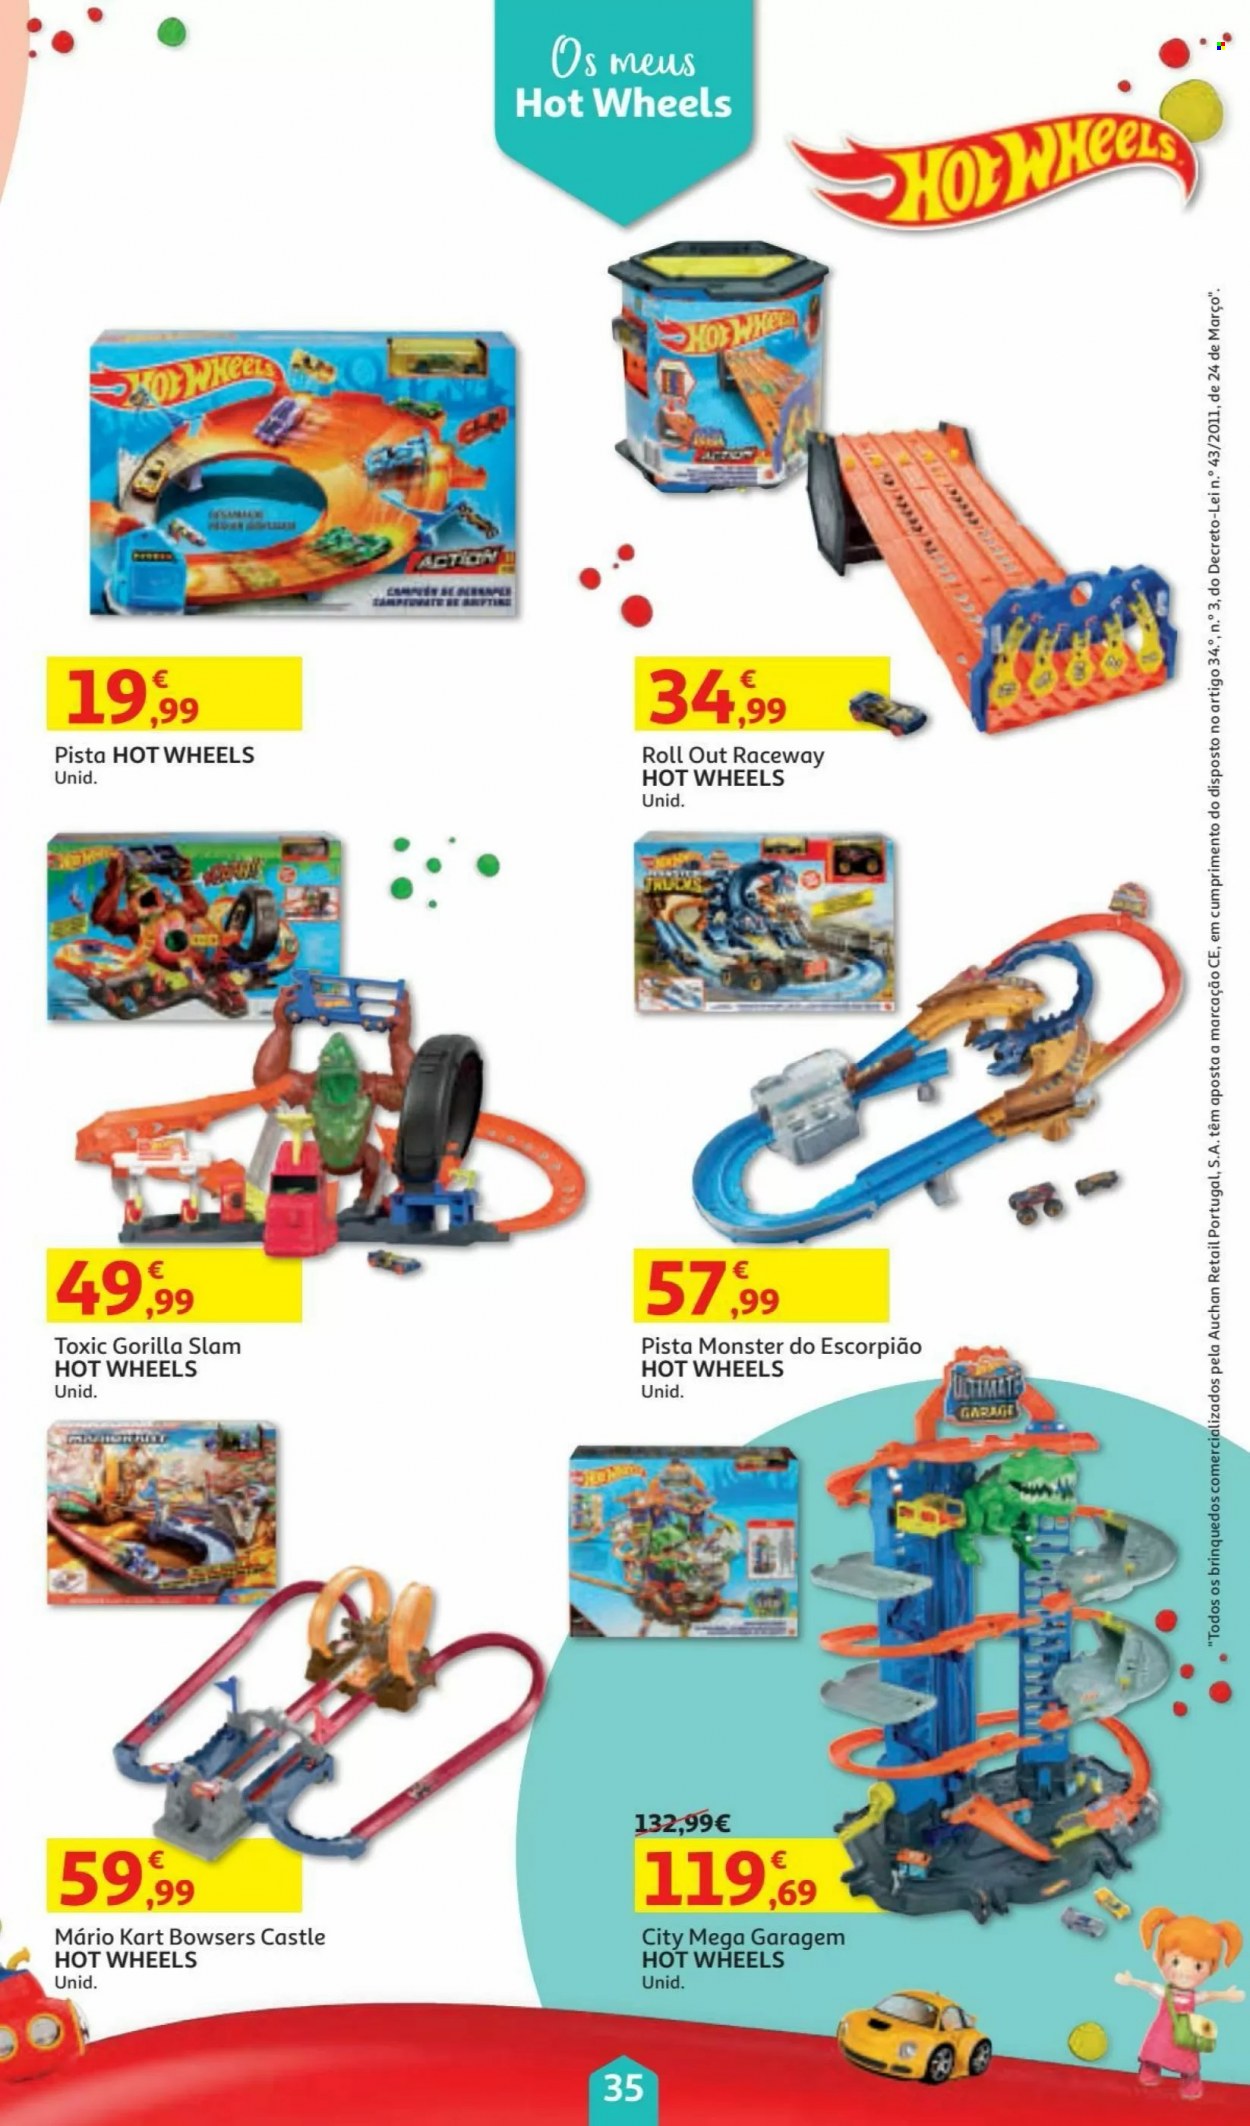 thumbnail - Folheto Auchan - 5.11.2021 - 24.12.2021 - Produtos em promoção - Hot Wheels. Página 35.